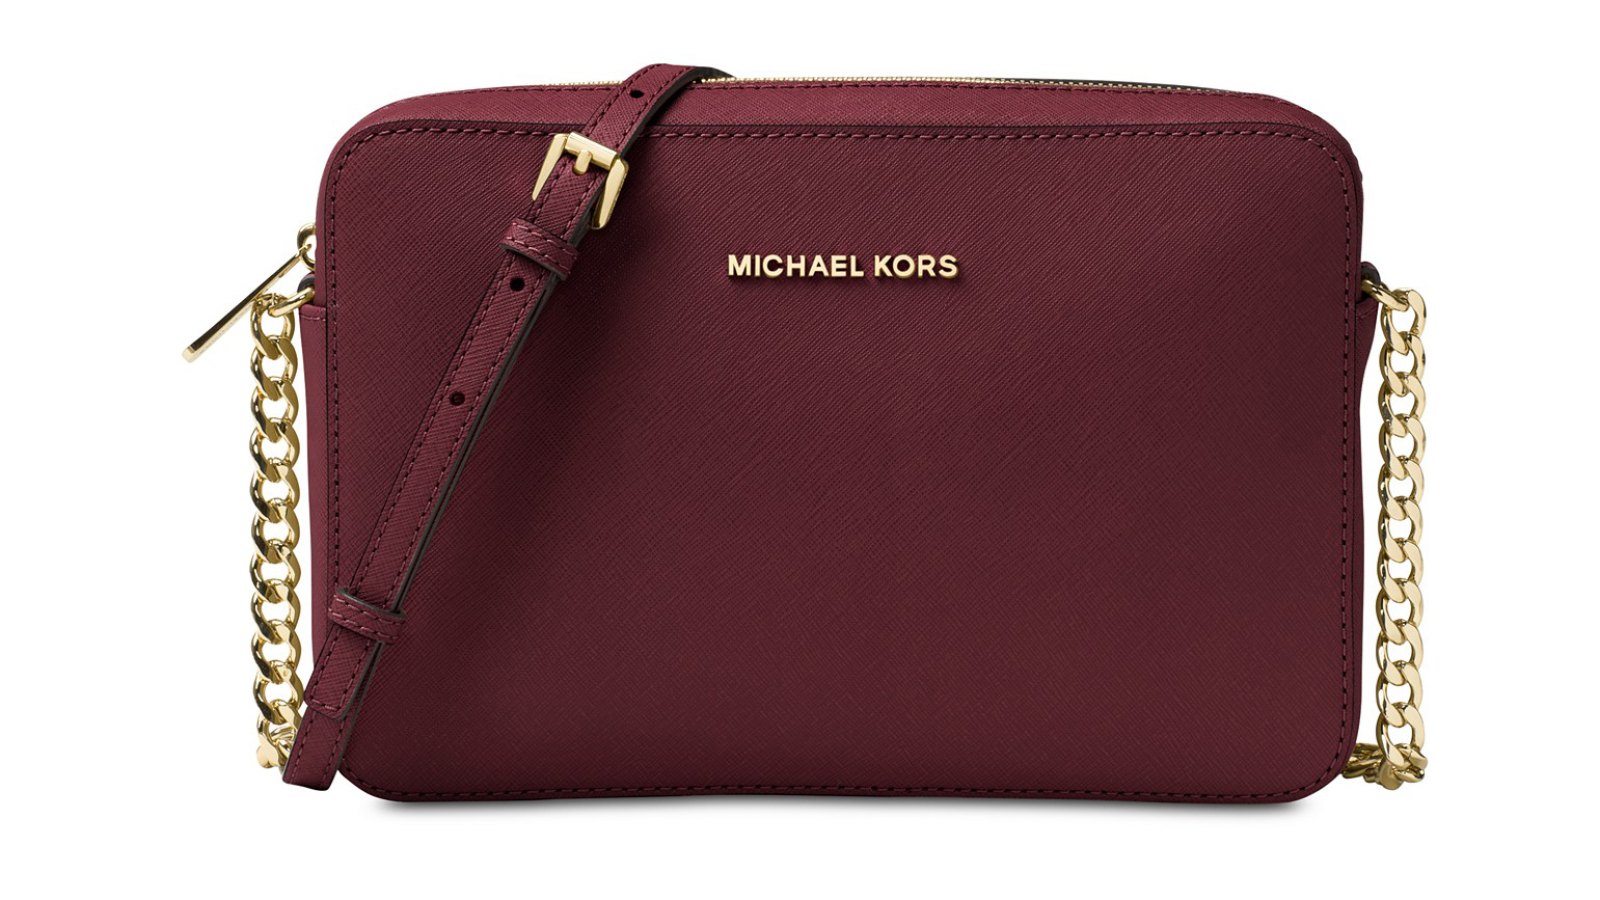 Michael Kors  Cross body handbags, Michael kors, Michael kors satchel